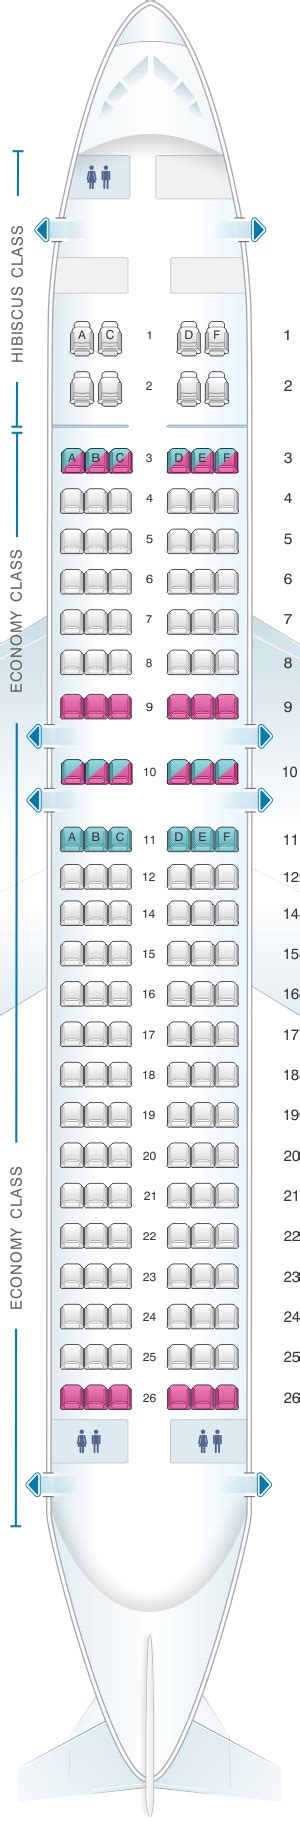 Seat Map Aircalin Airbus A320 Seatmaestro